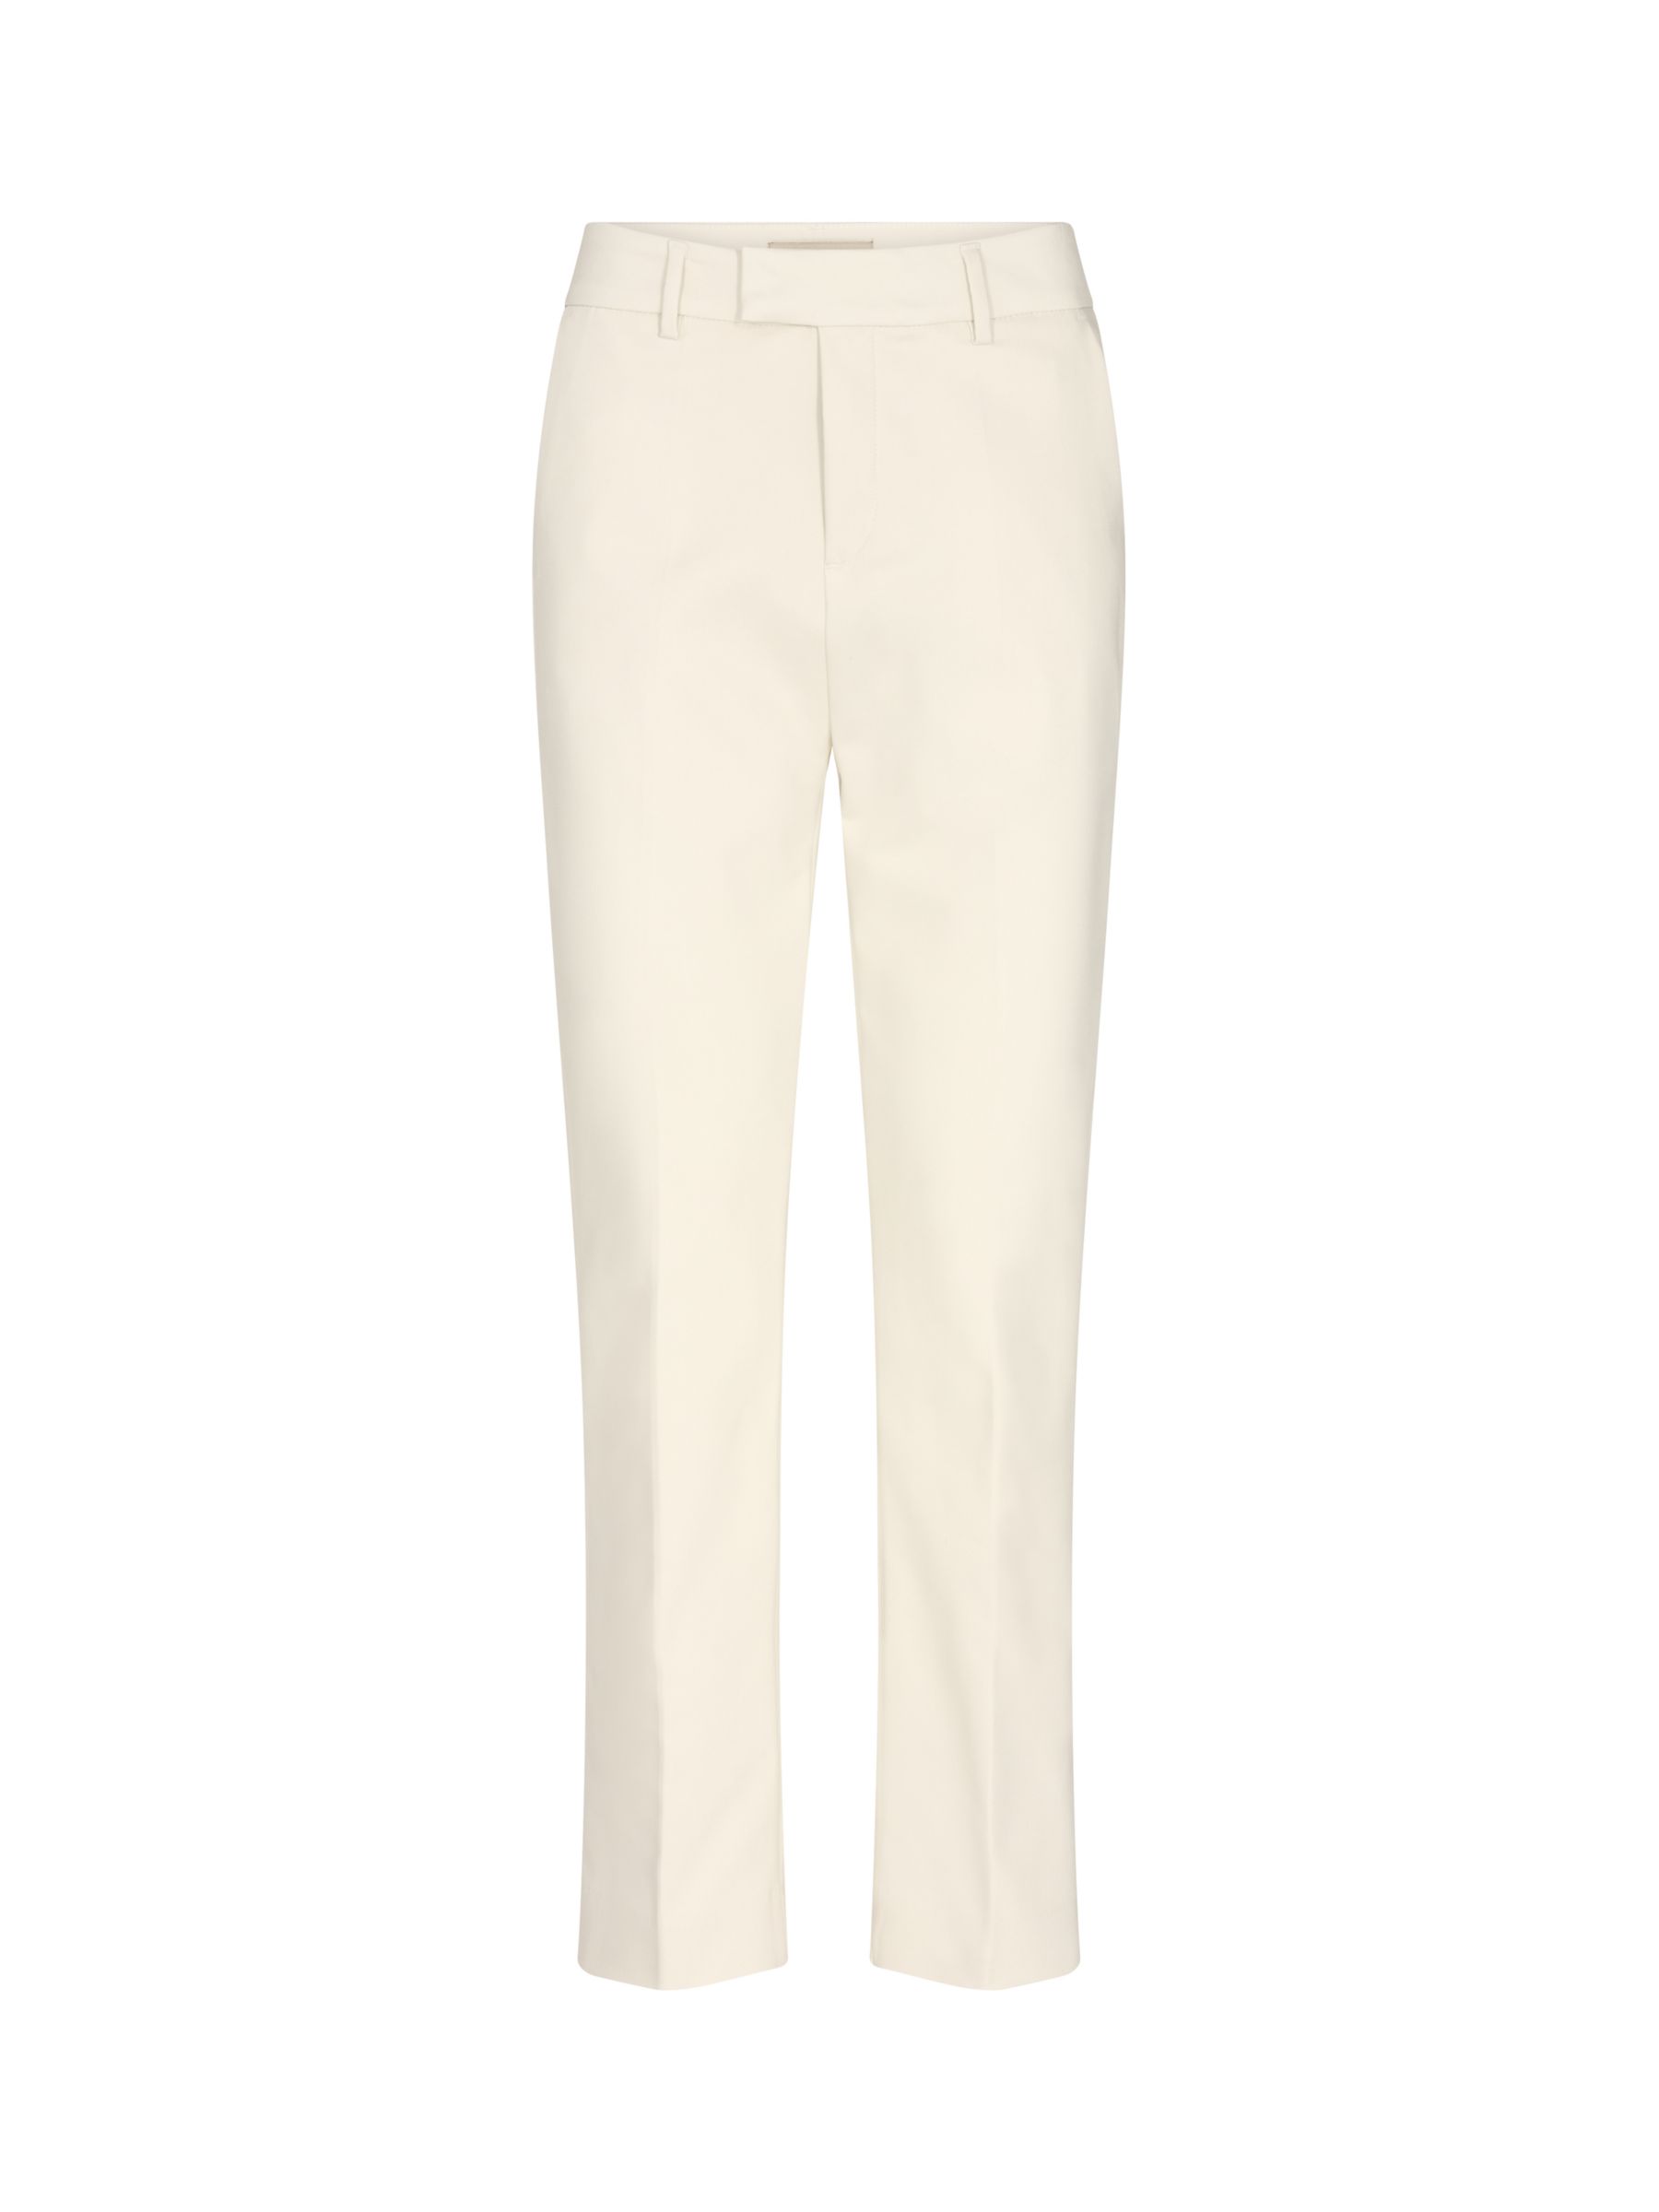 MOS MOSH Ellen Night Tailored Trousers, Ecru at John Lewis & Partners